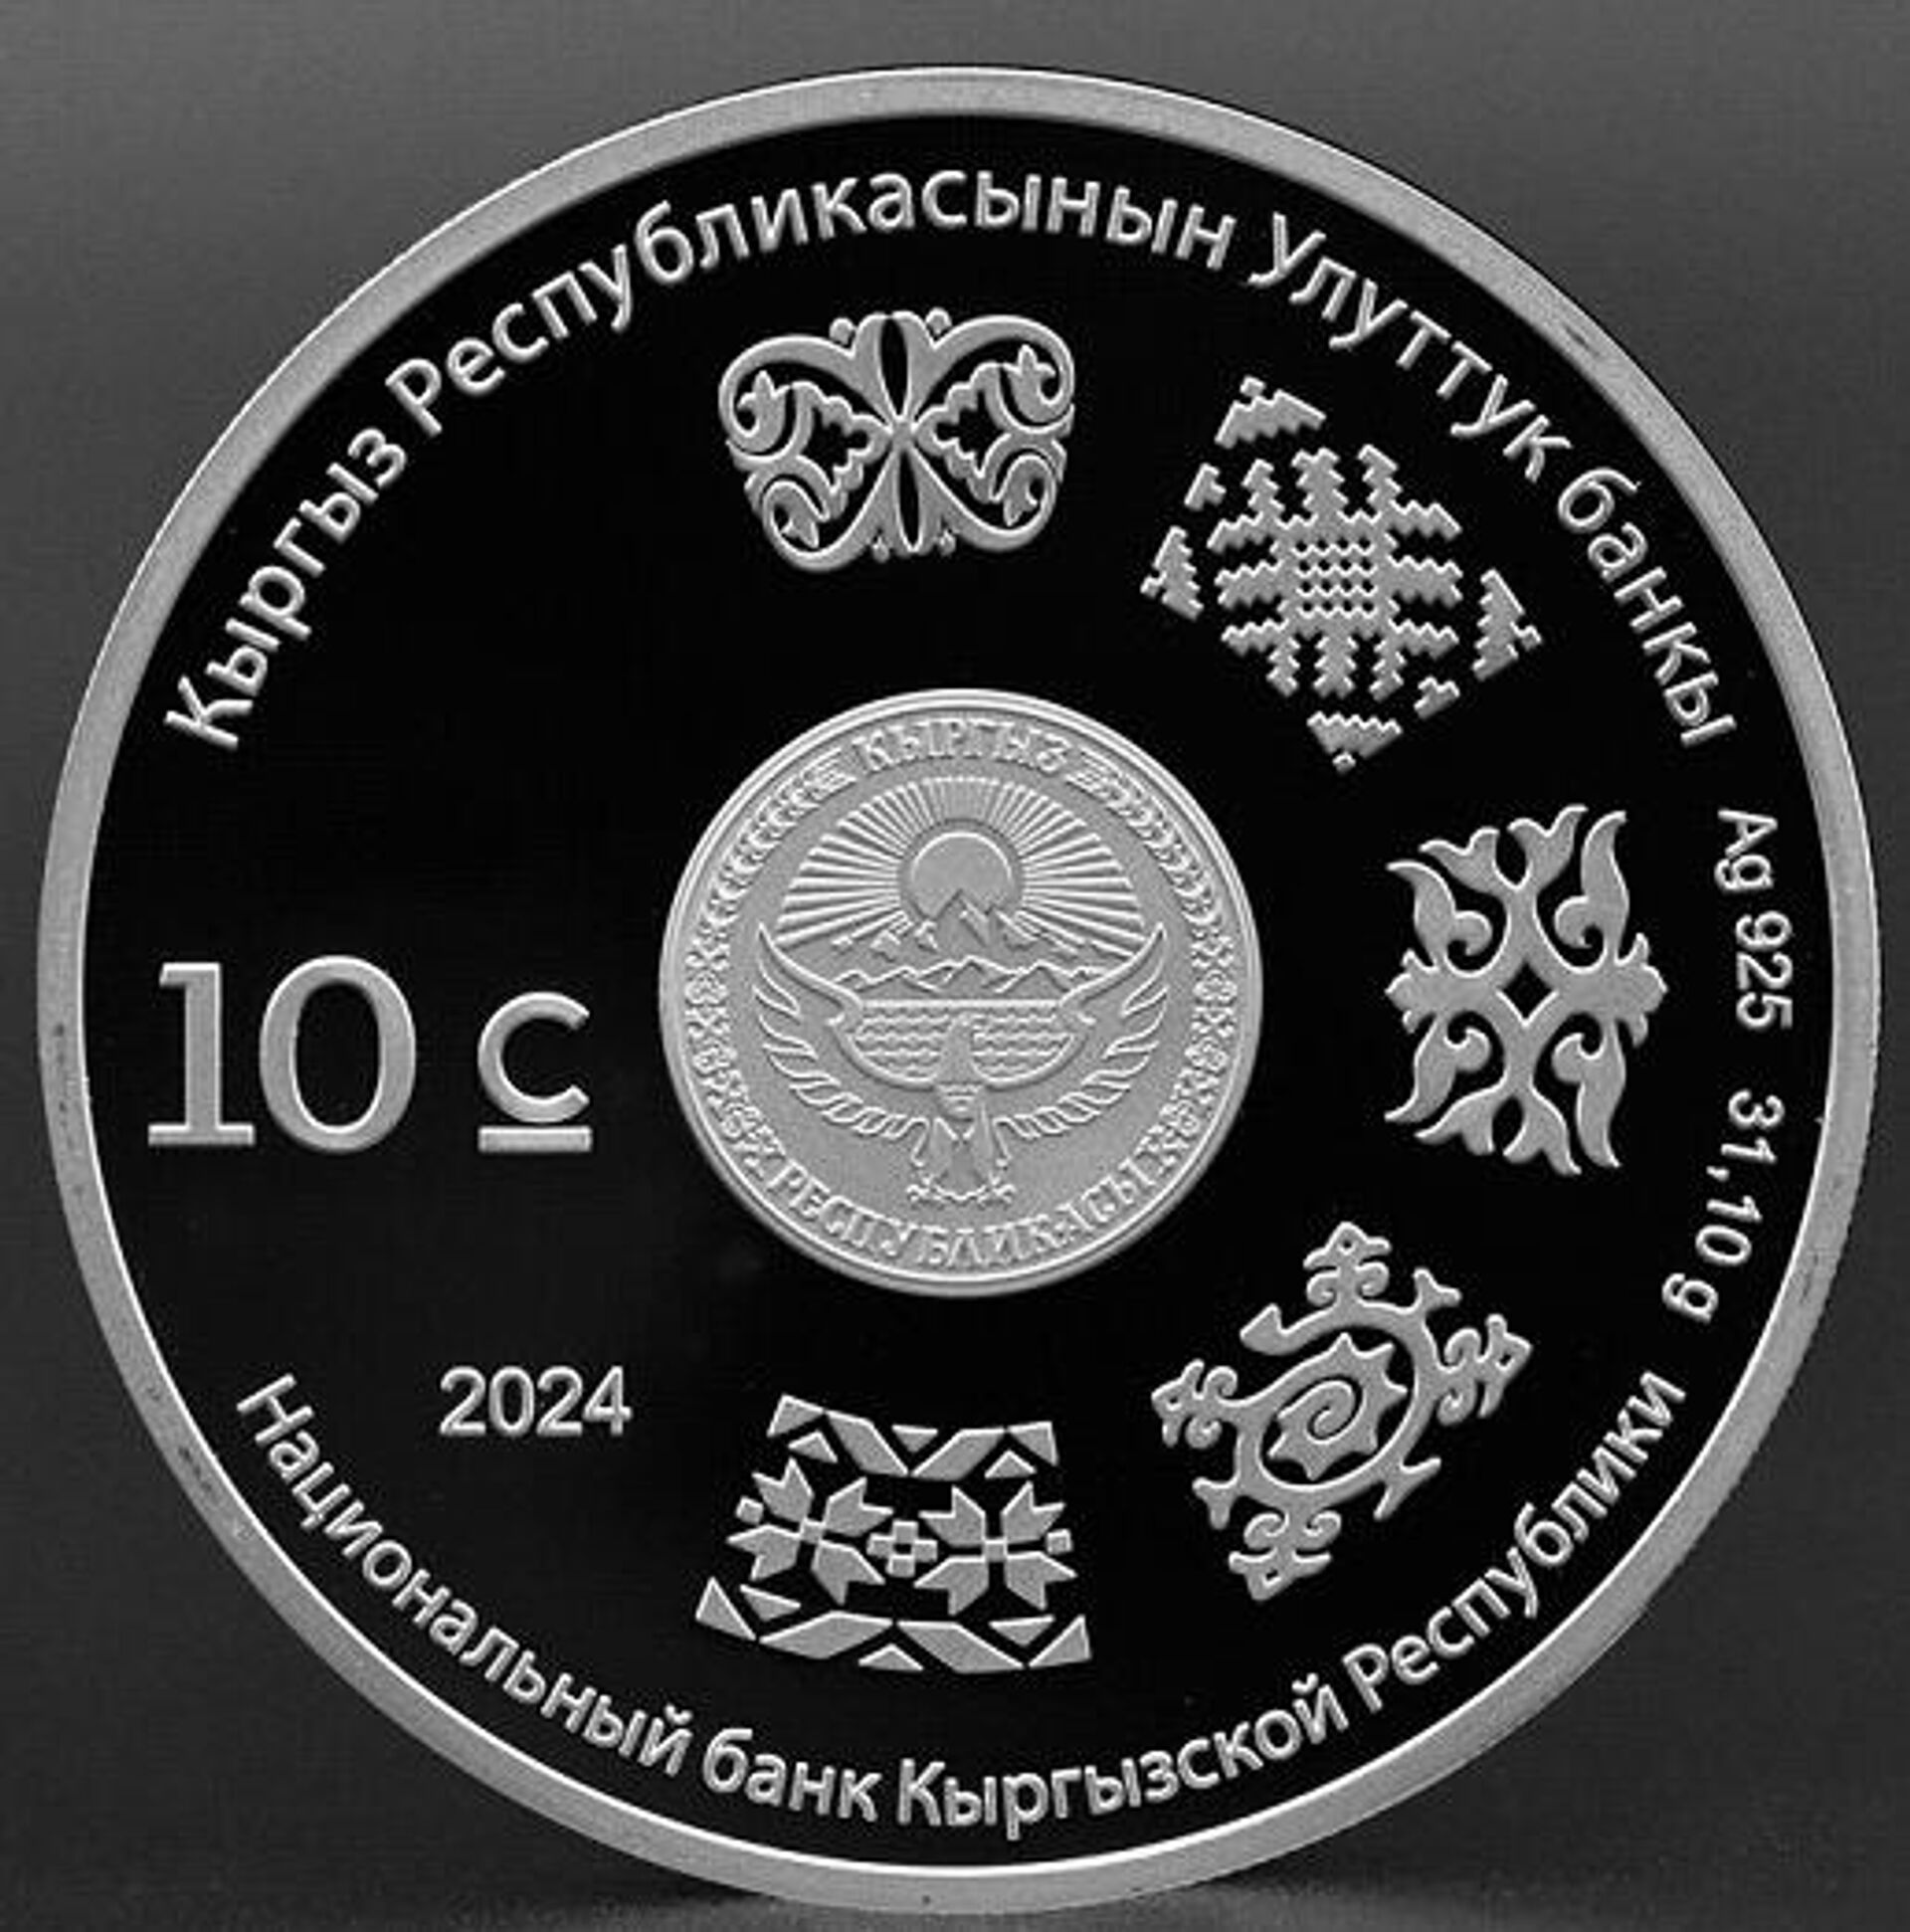 Nasbank Kirgizstana vipustil kolleksionnuyu monetu YeAES — 10 let - Sputnik O‘zbekiston, 1920, 30.04.2024